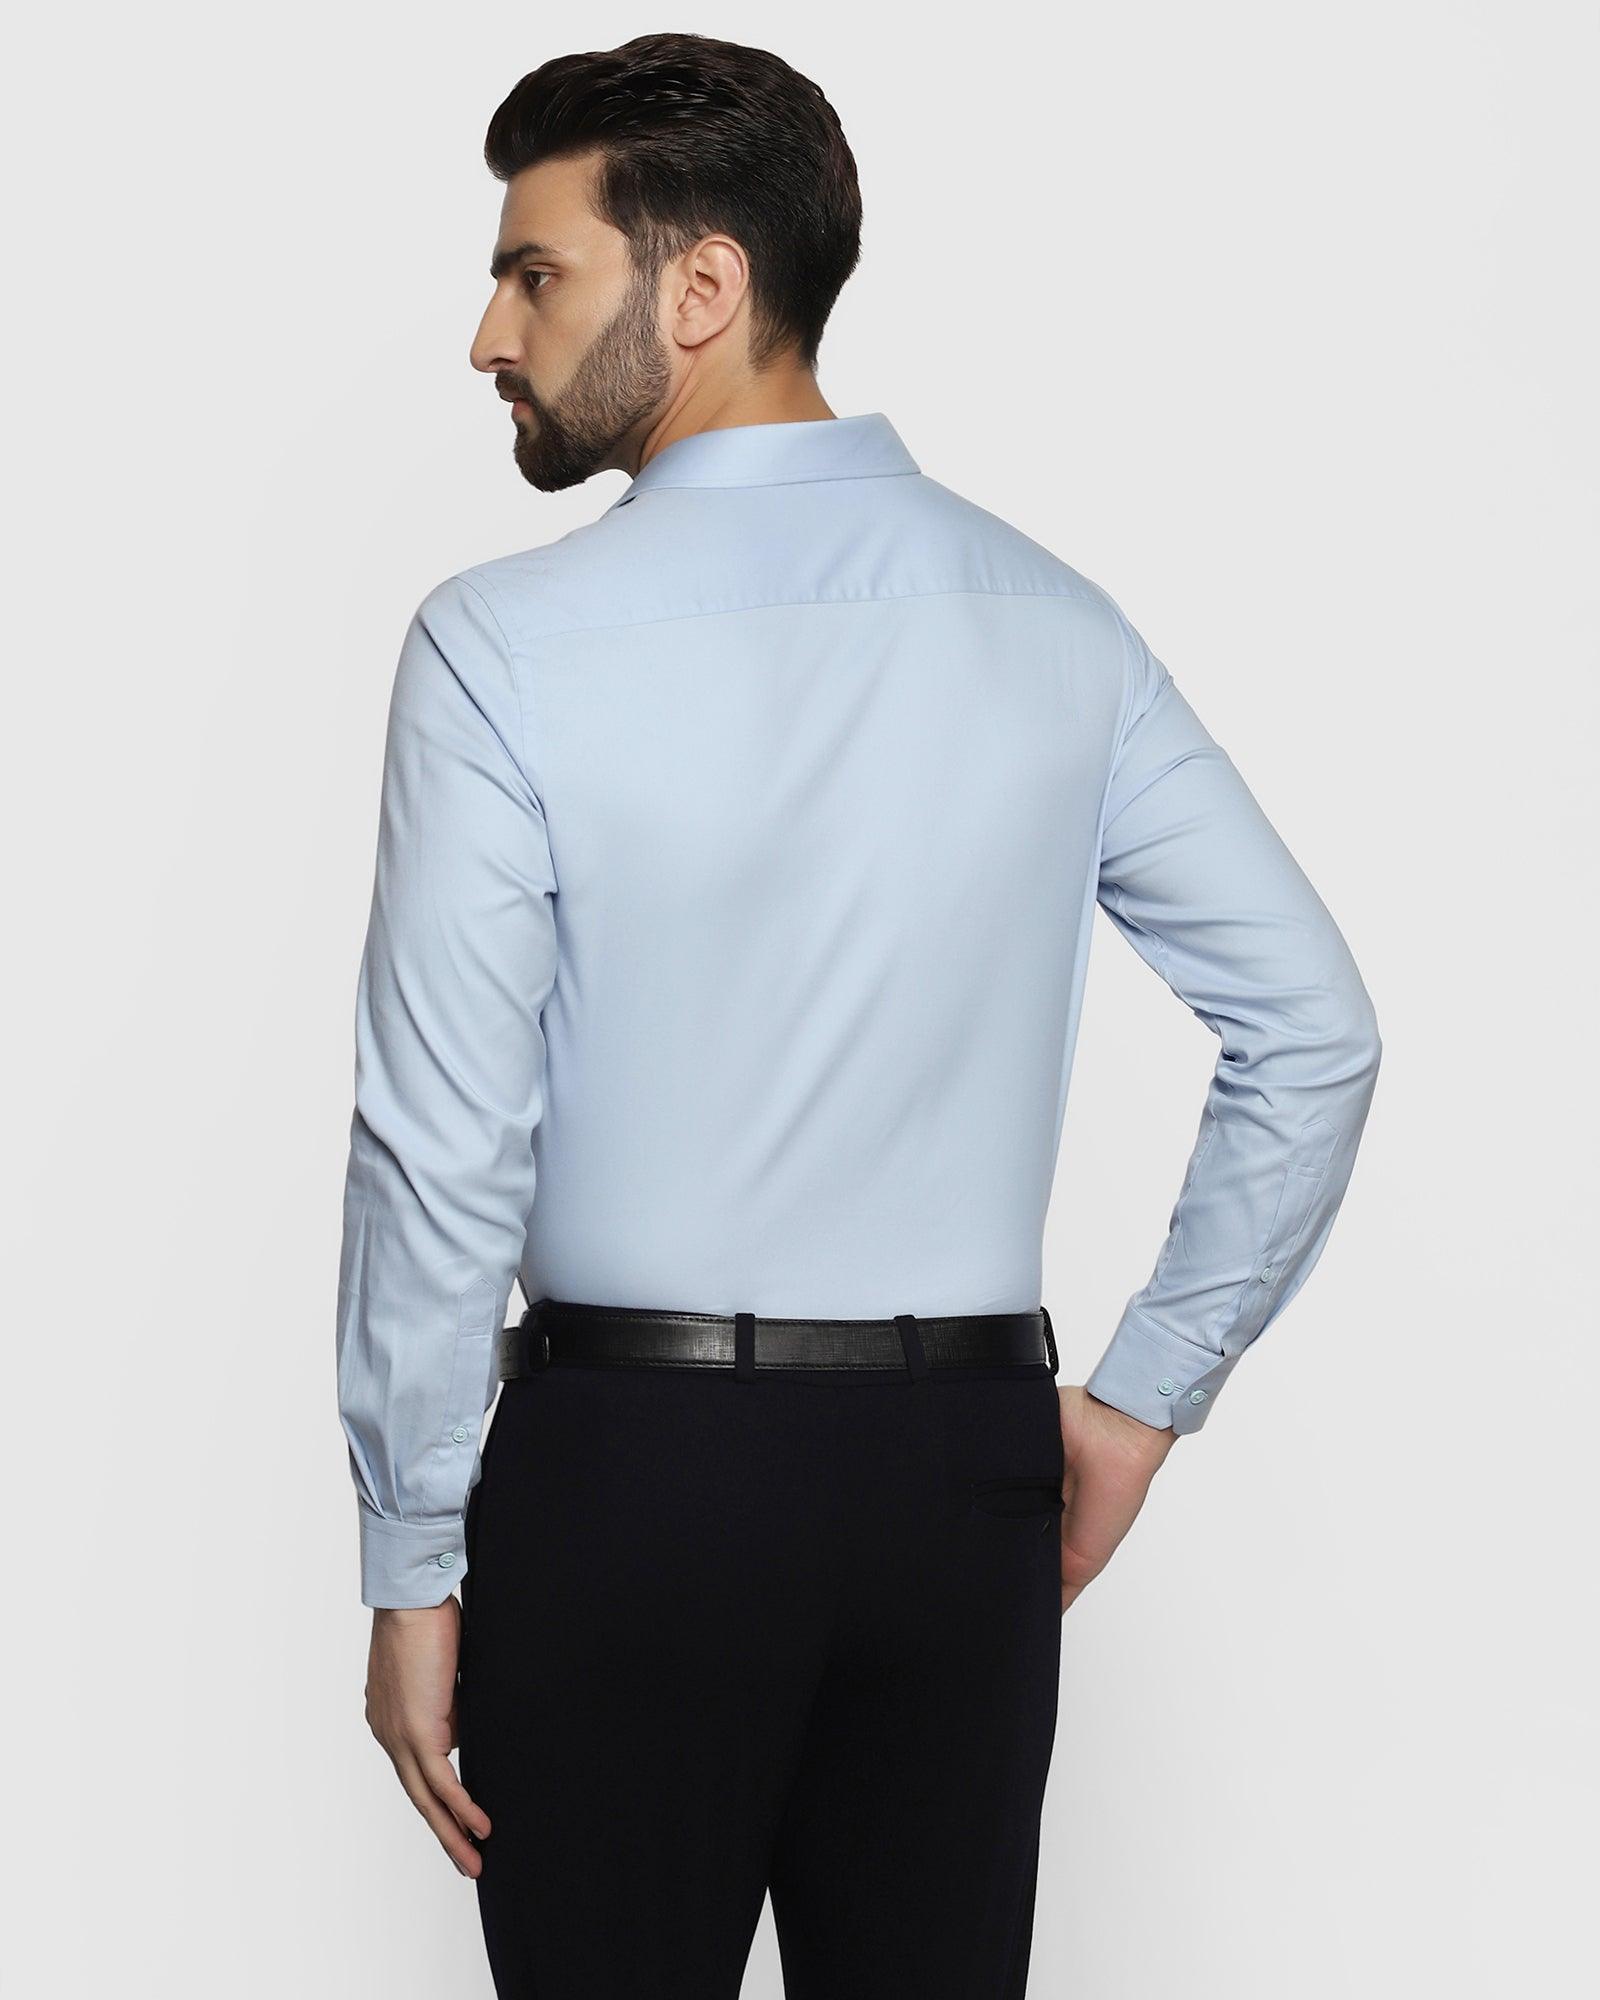 TechPro Formal Blue Solid Shirt - Tartan